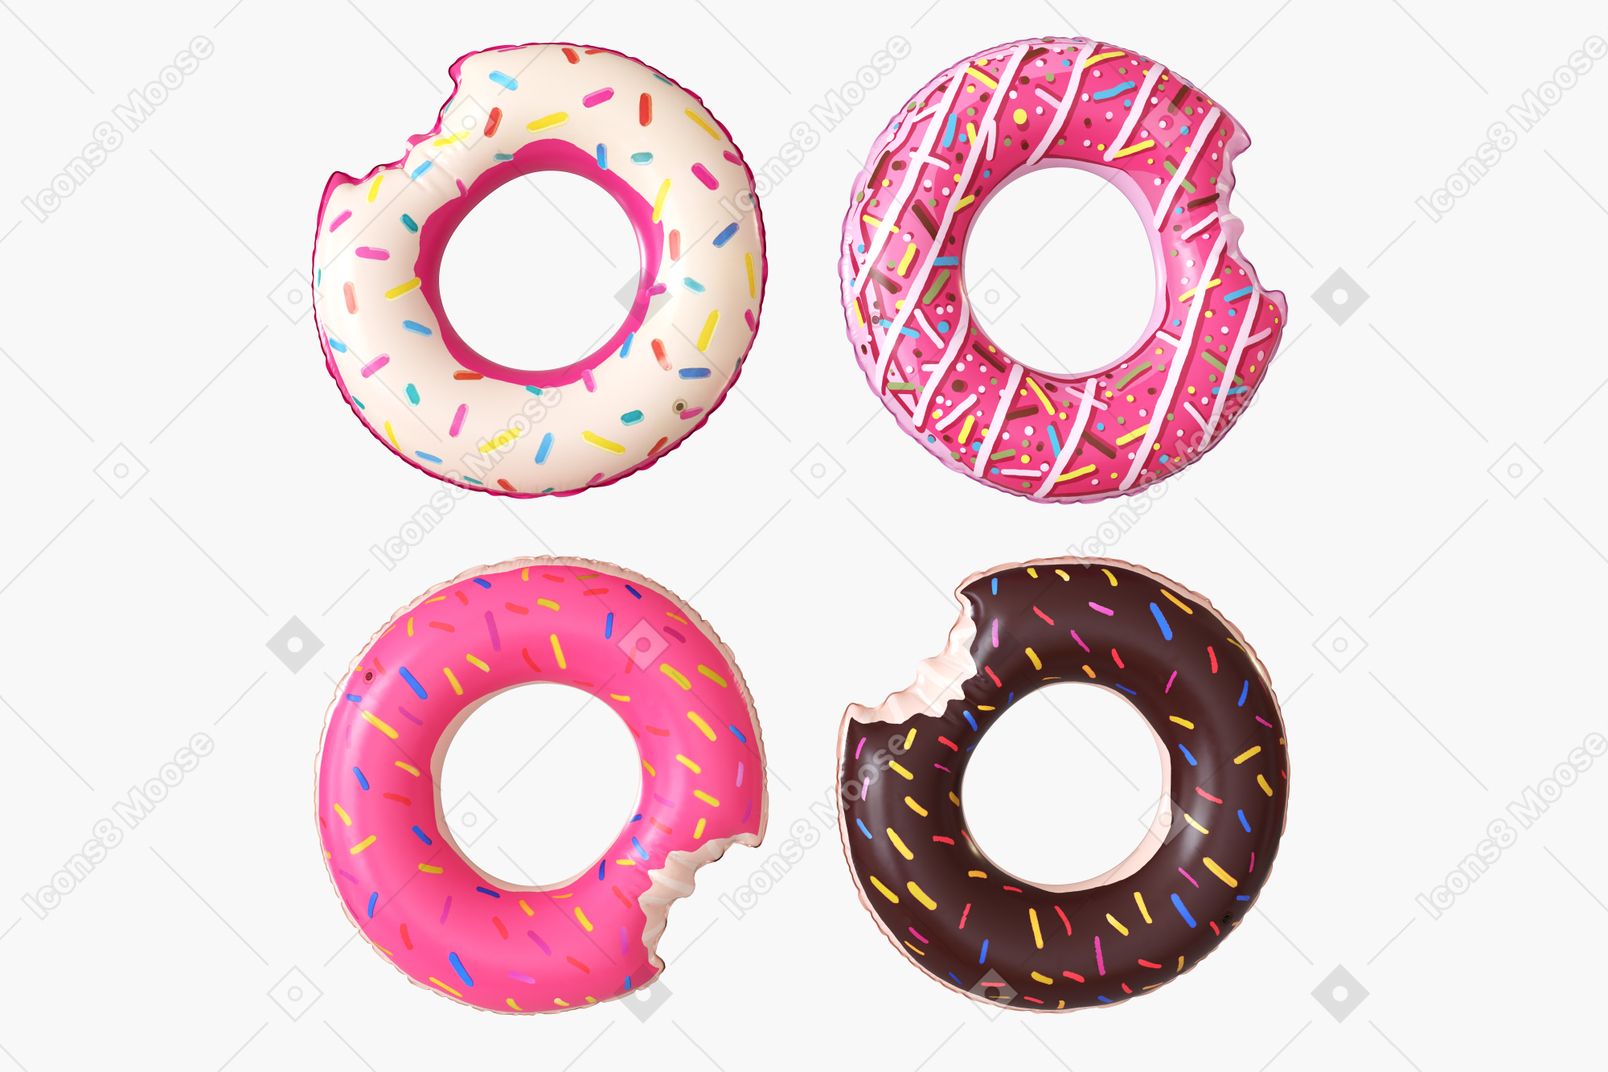 Donut rubber rings on white background